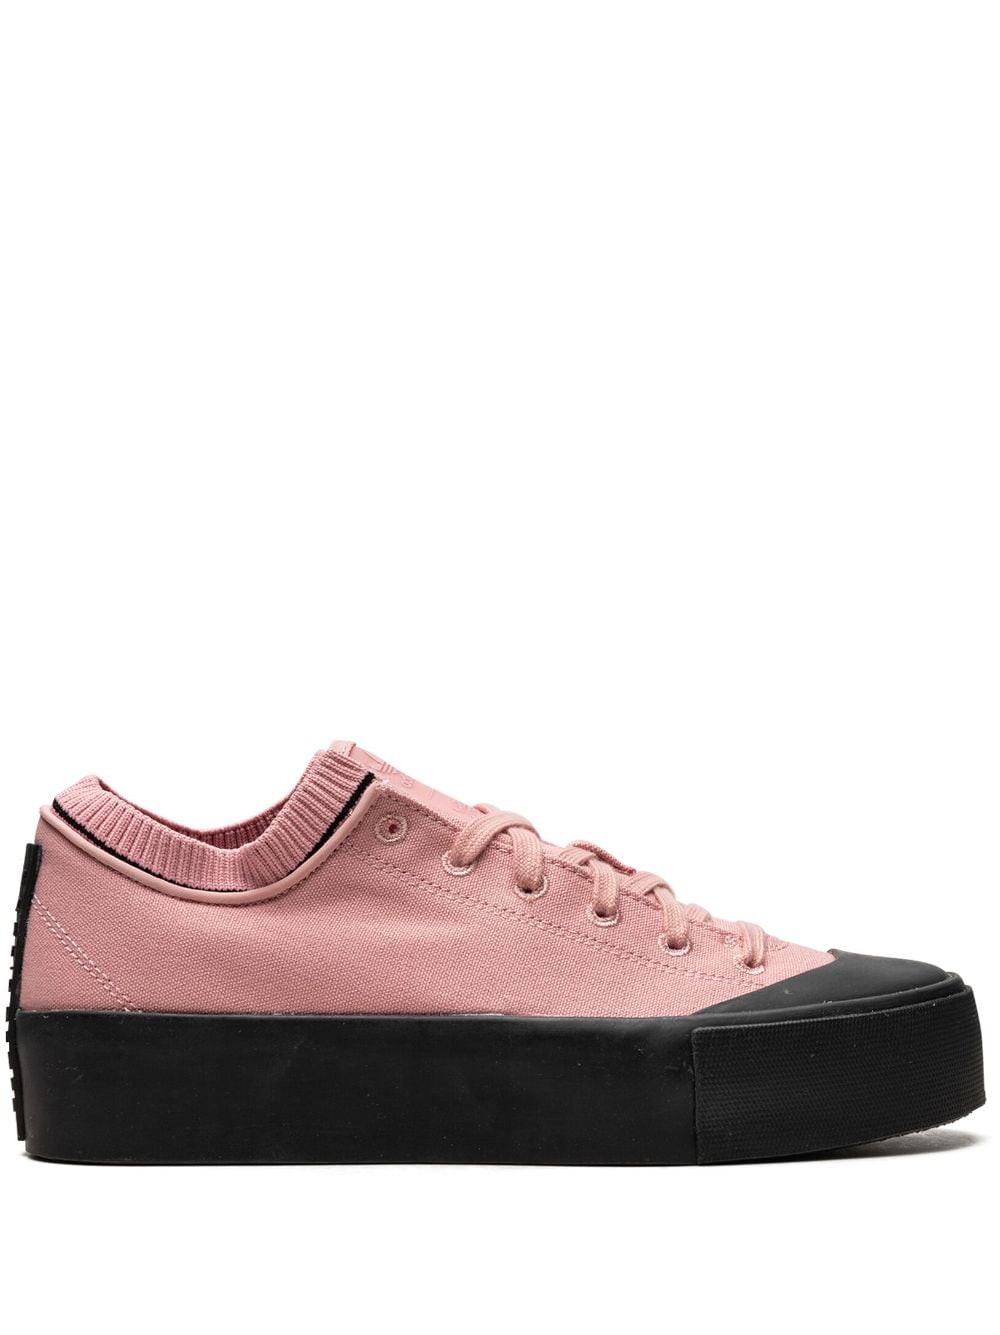 adidas x Karlie Kloss XX92 platform sneakers - Pink von adidas